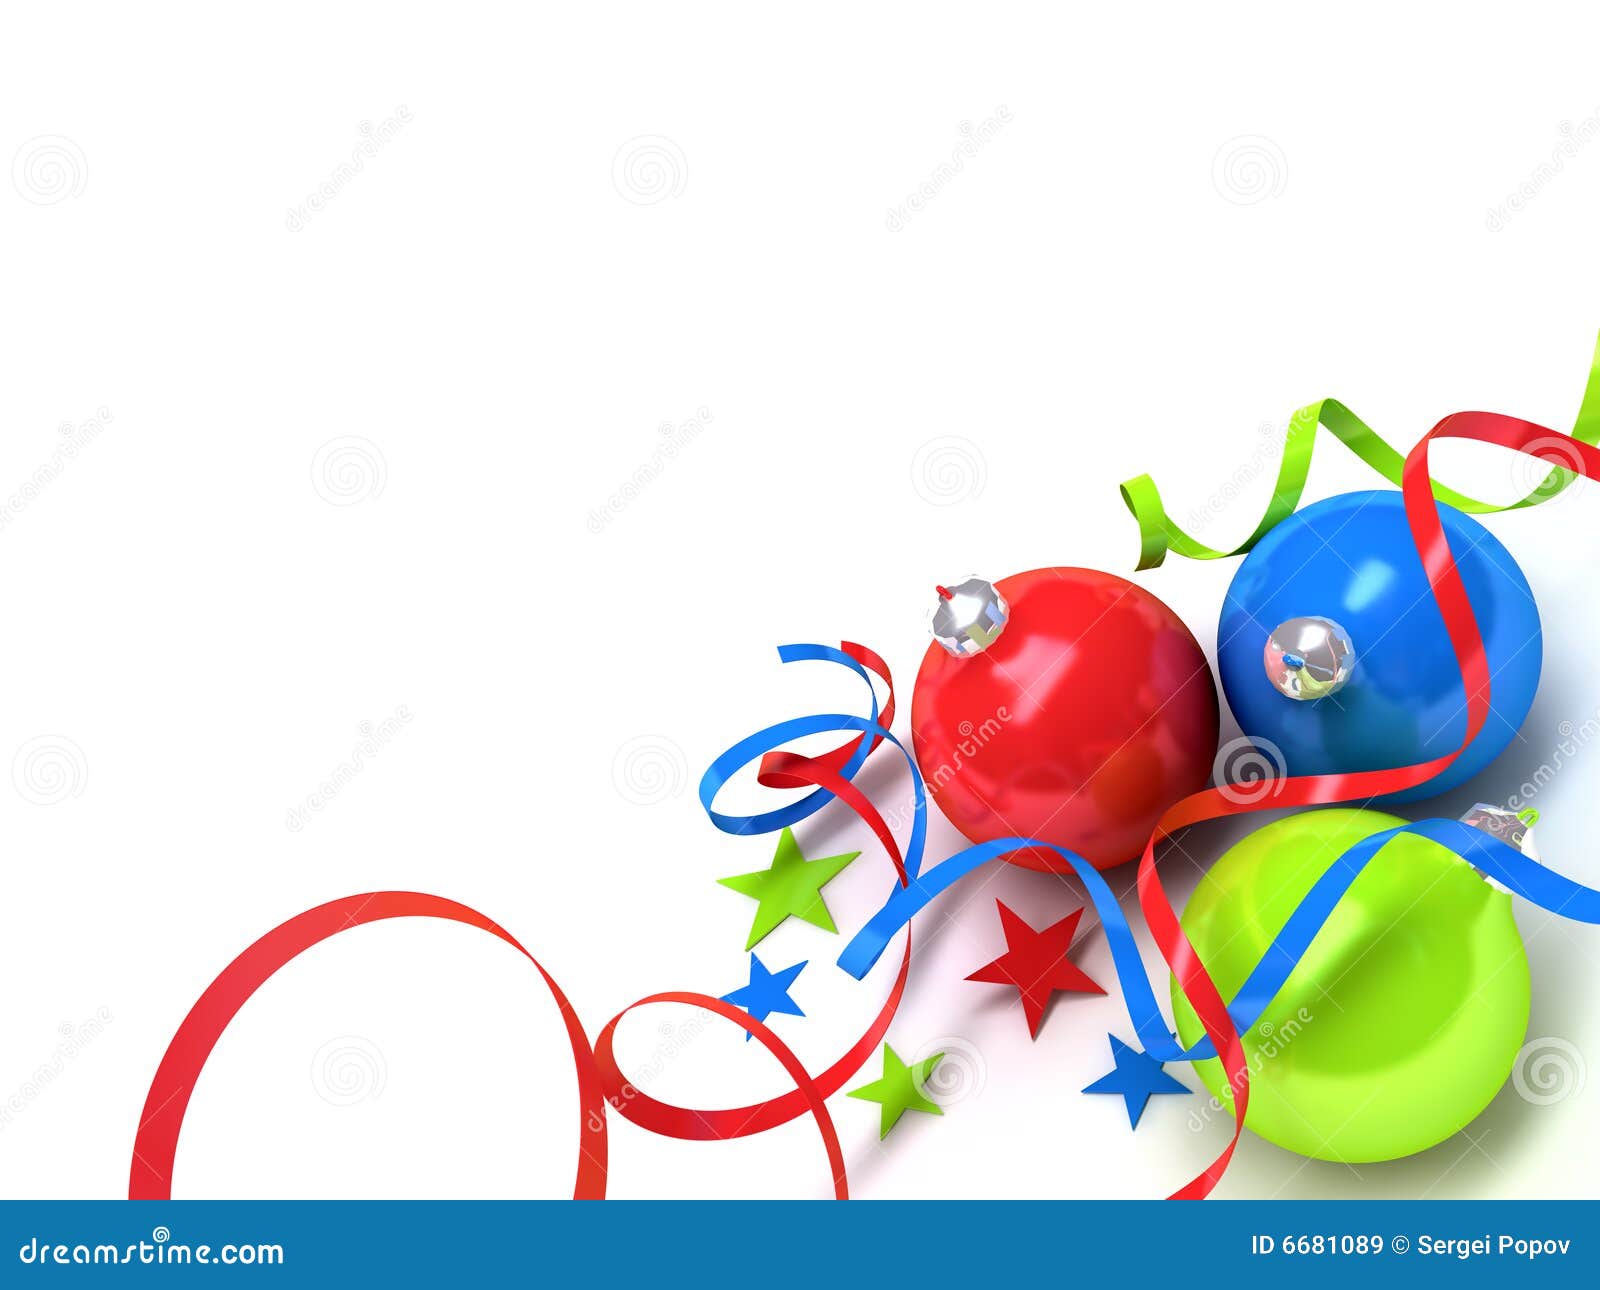 Christmas toys stock illustration. Illustration of bright - 6681089